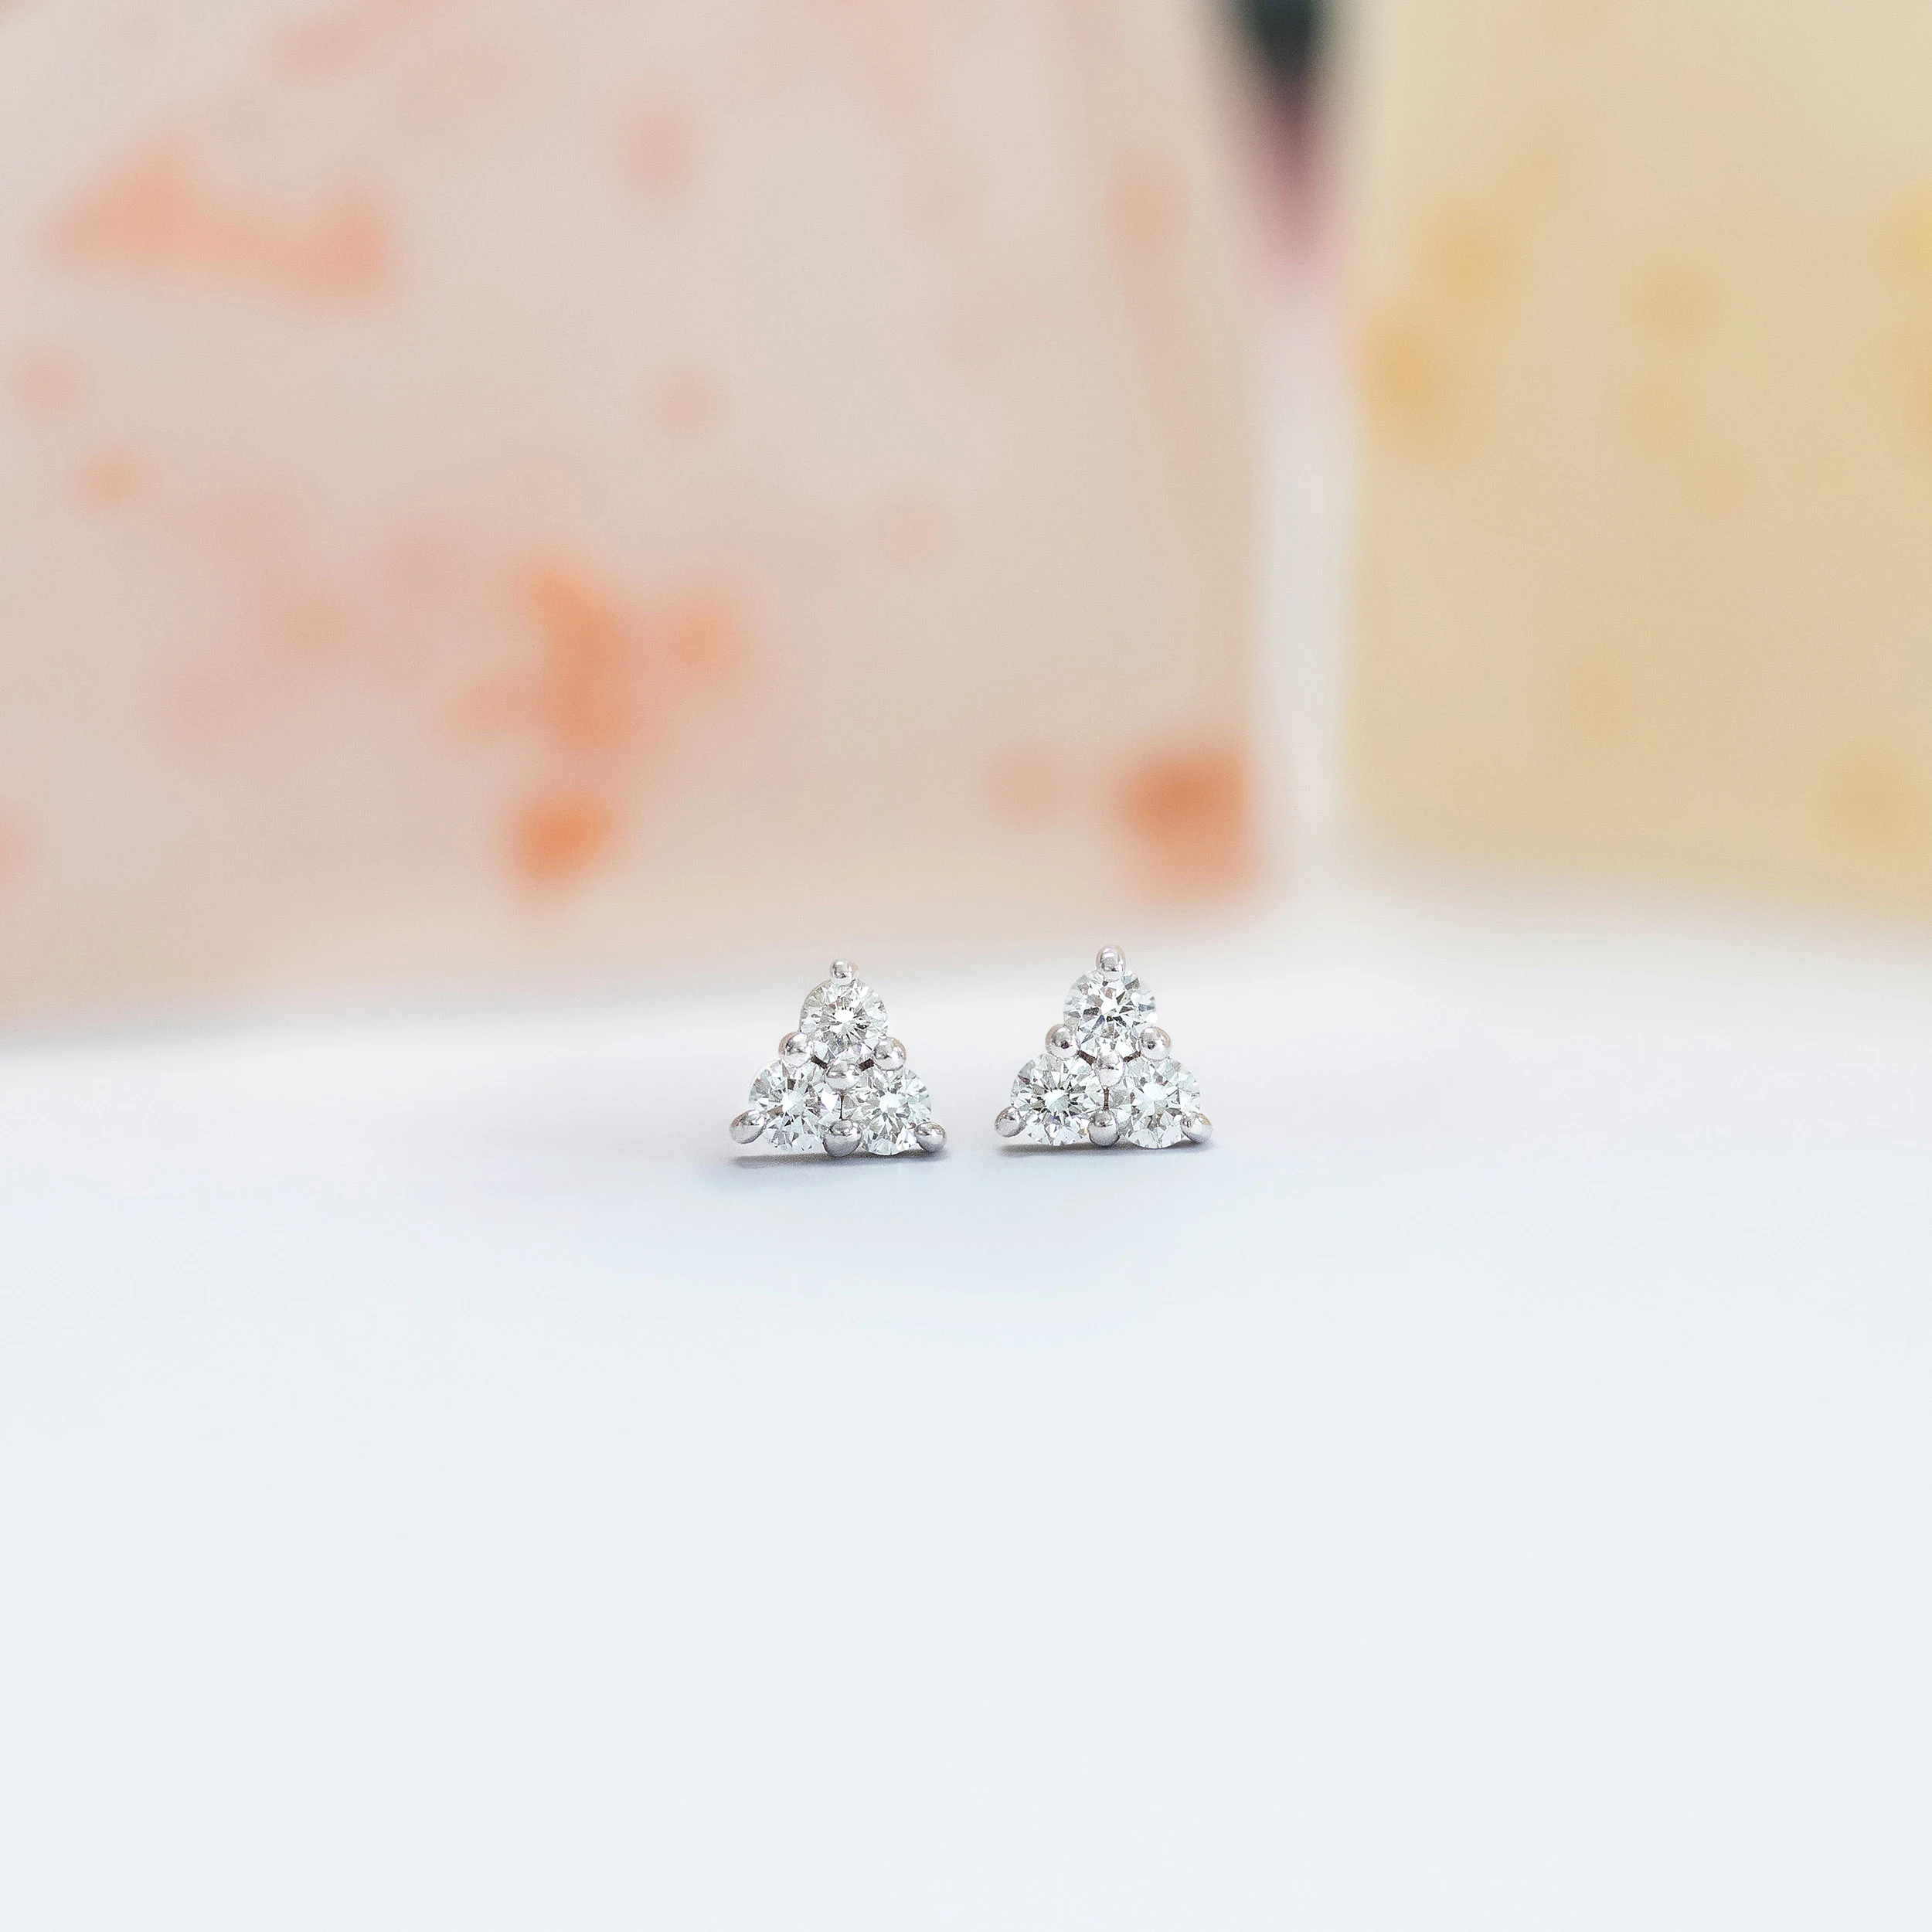 0.18 ct Round Lab Diamonds set in White Gold 0.18ctw Three Stone Diamond Earrings in 14k White Gold (Main View)